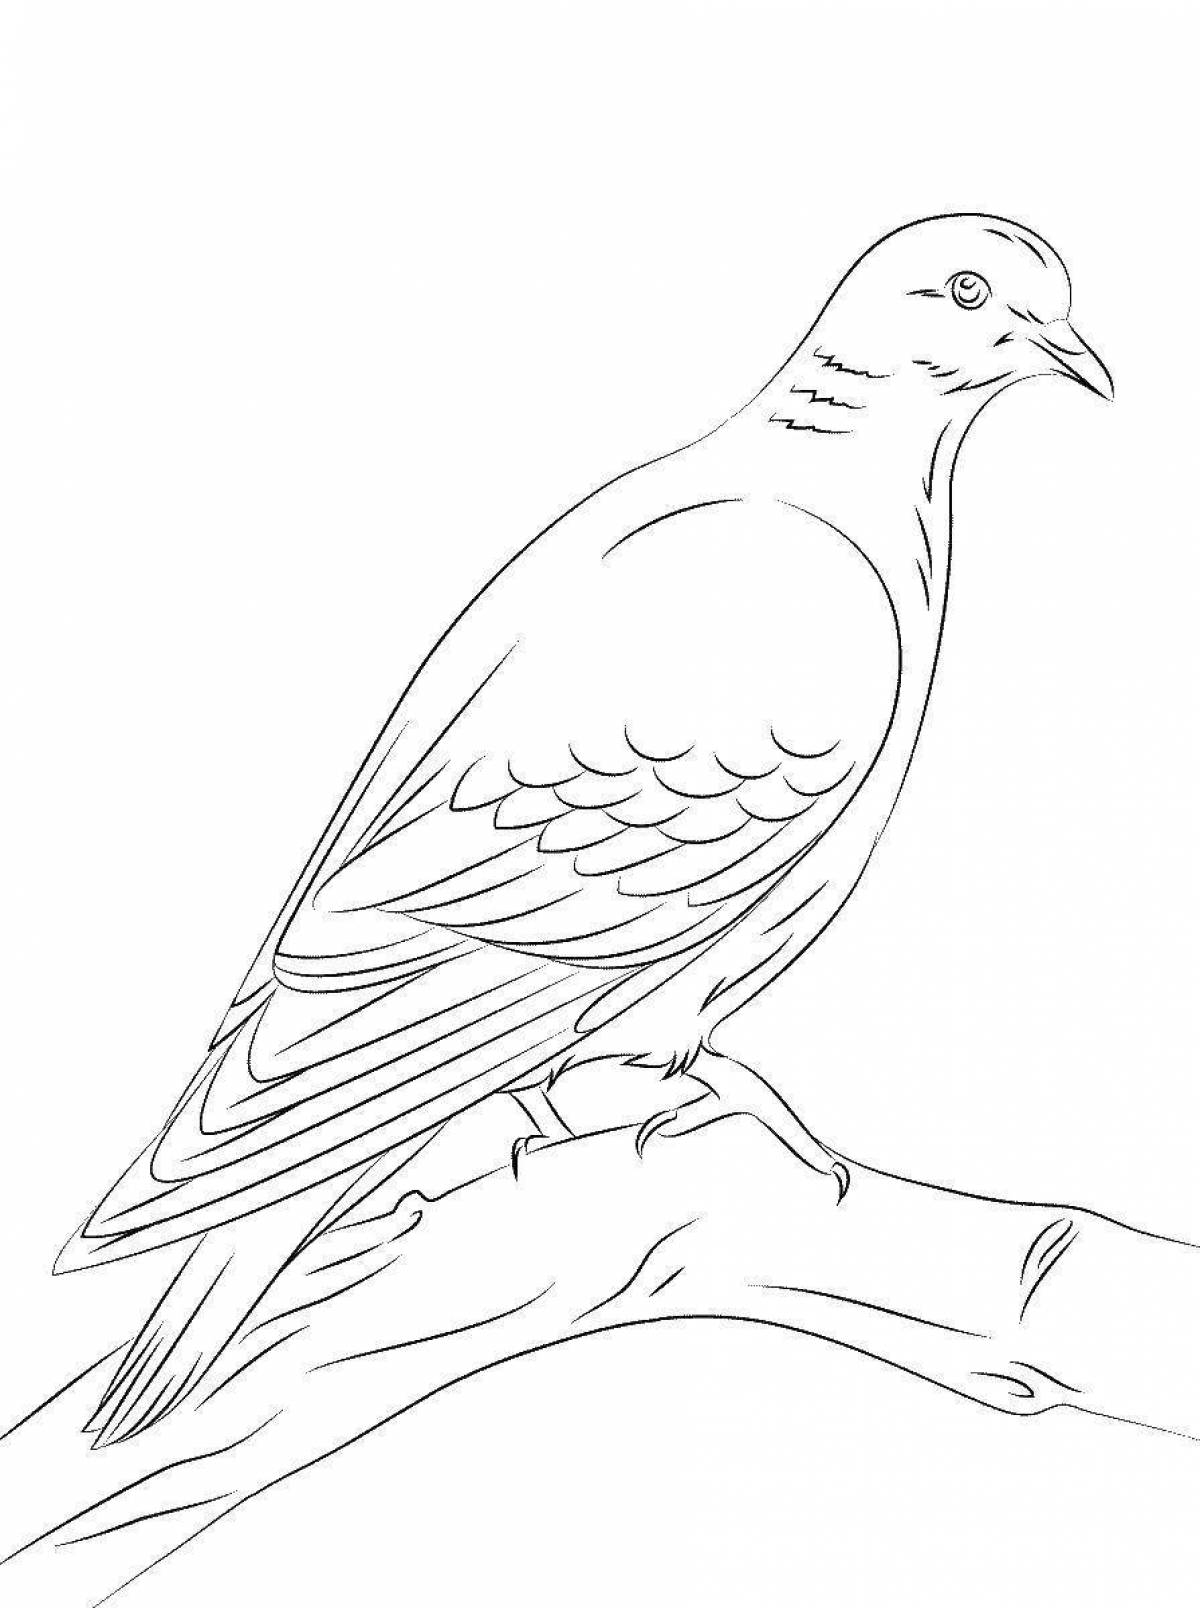 Joyful coloring passenger pigeon